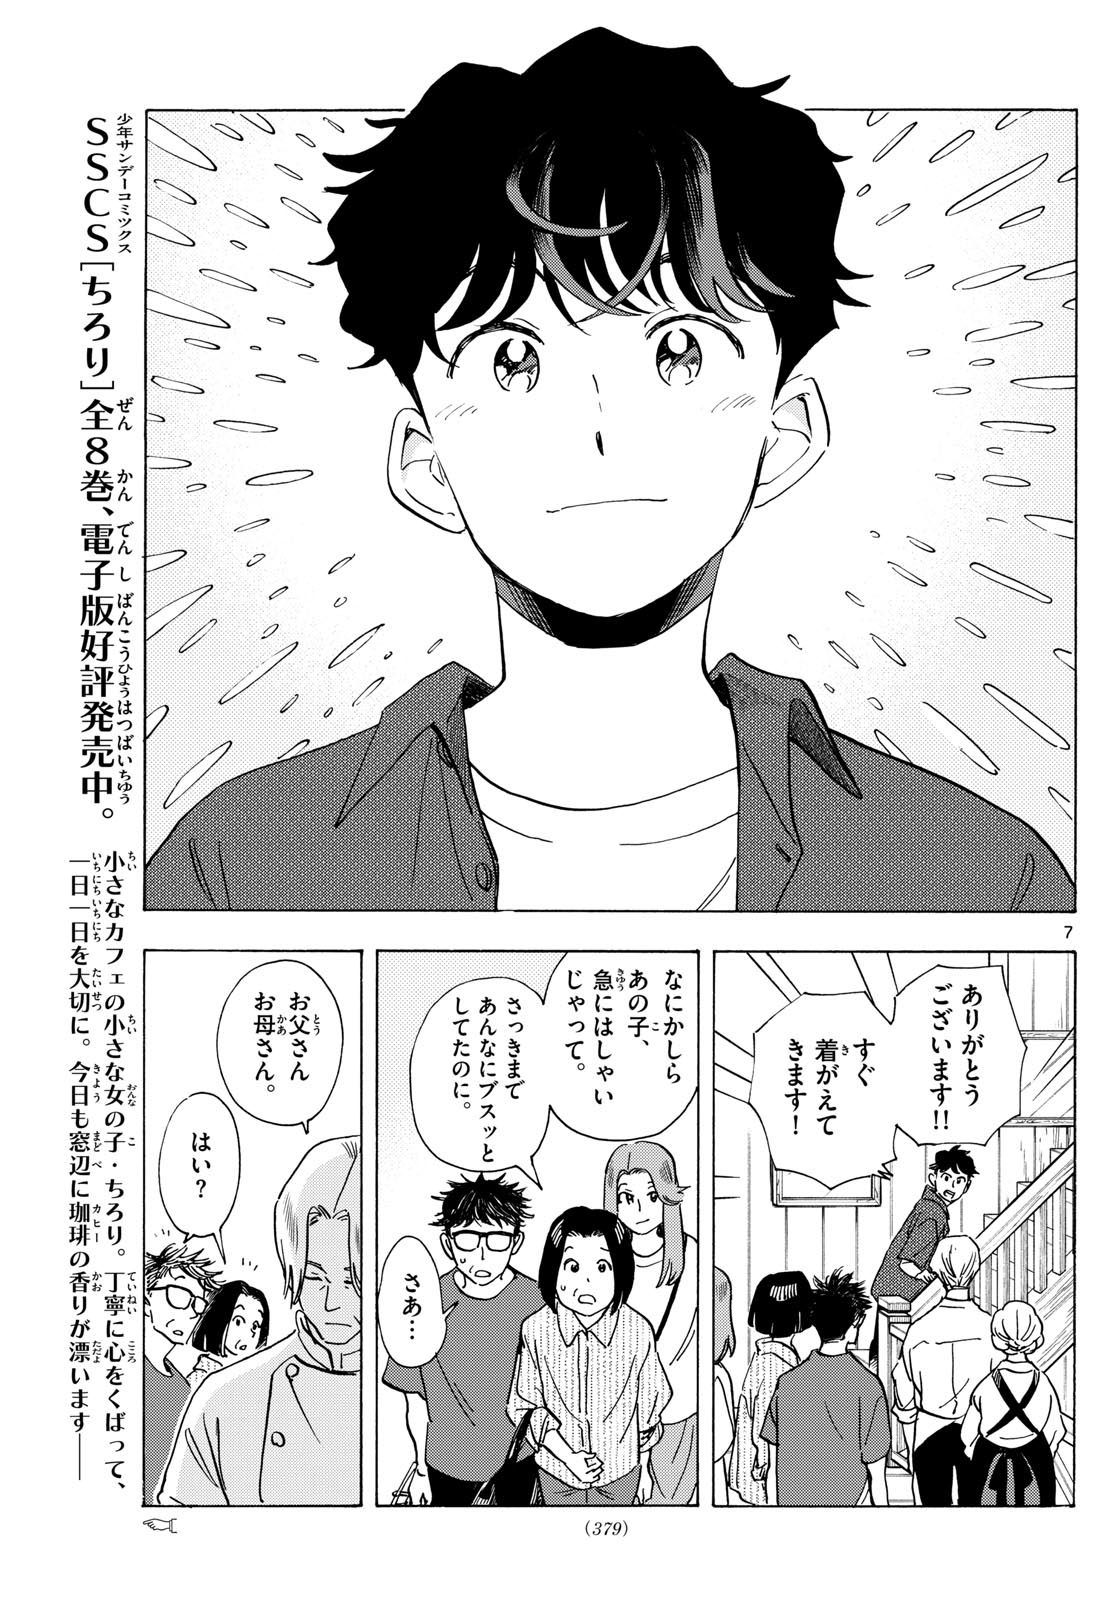 Maiko-san Chi no Makanai-san - Chapter 301 - Page 7